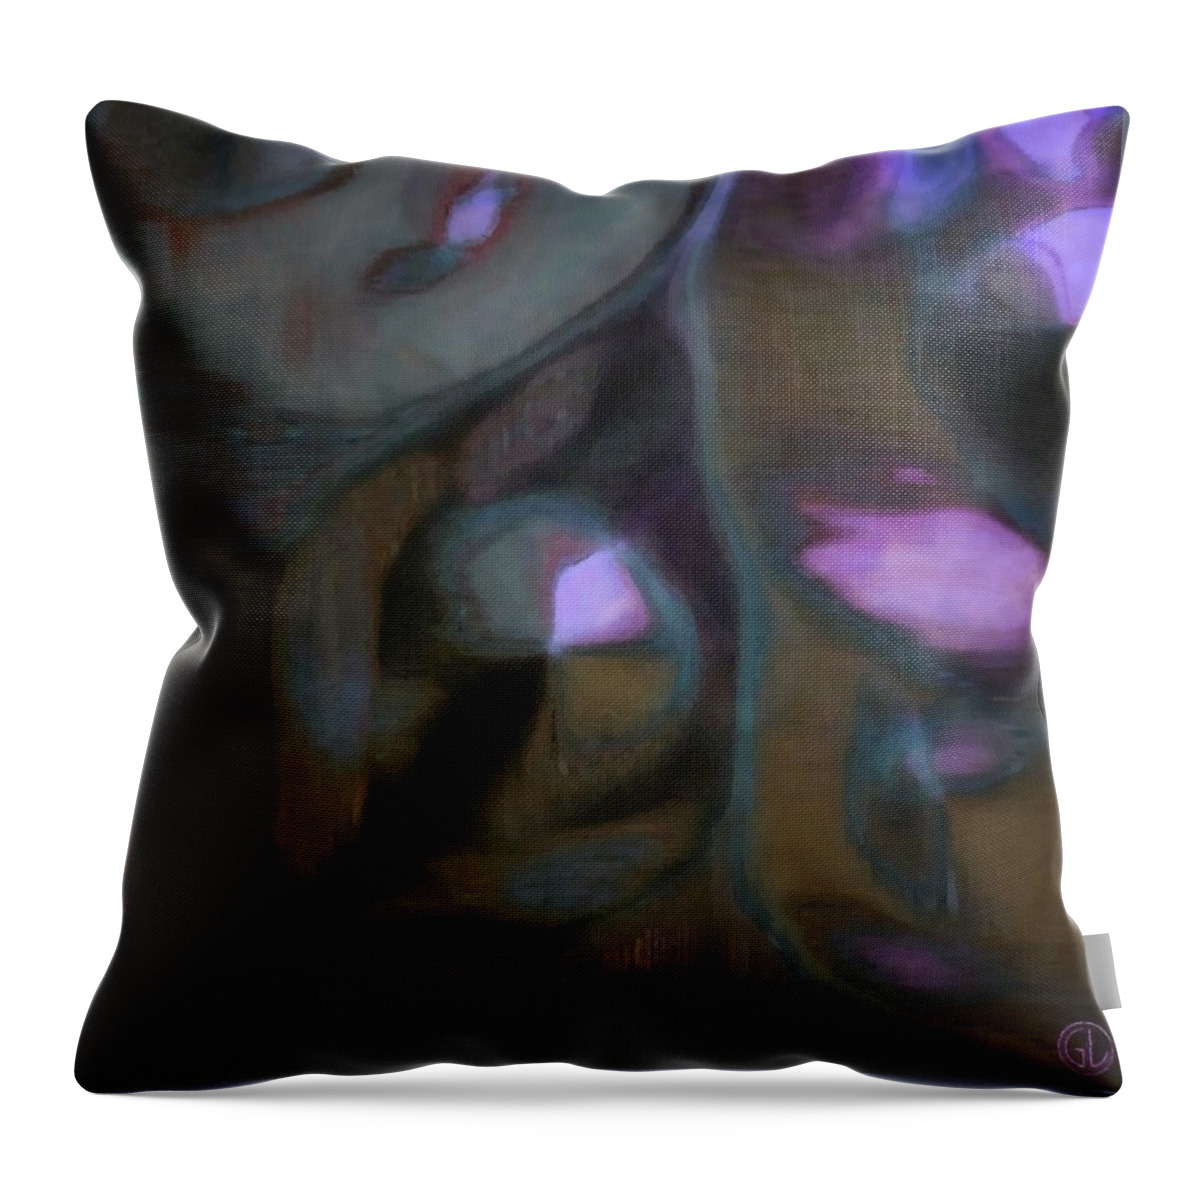 Abstract Throw Pillow featuring the digital art Organic abstract by Gun Legler